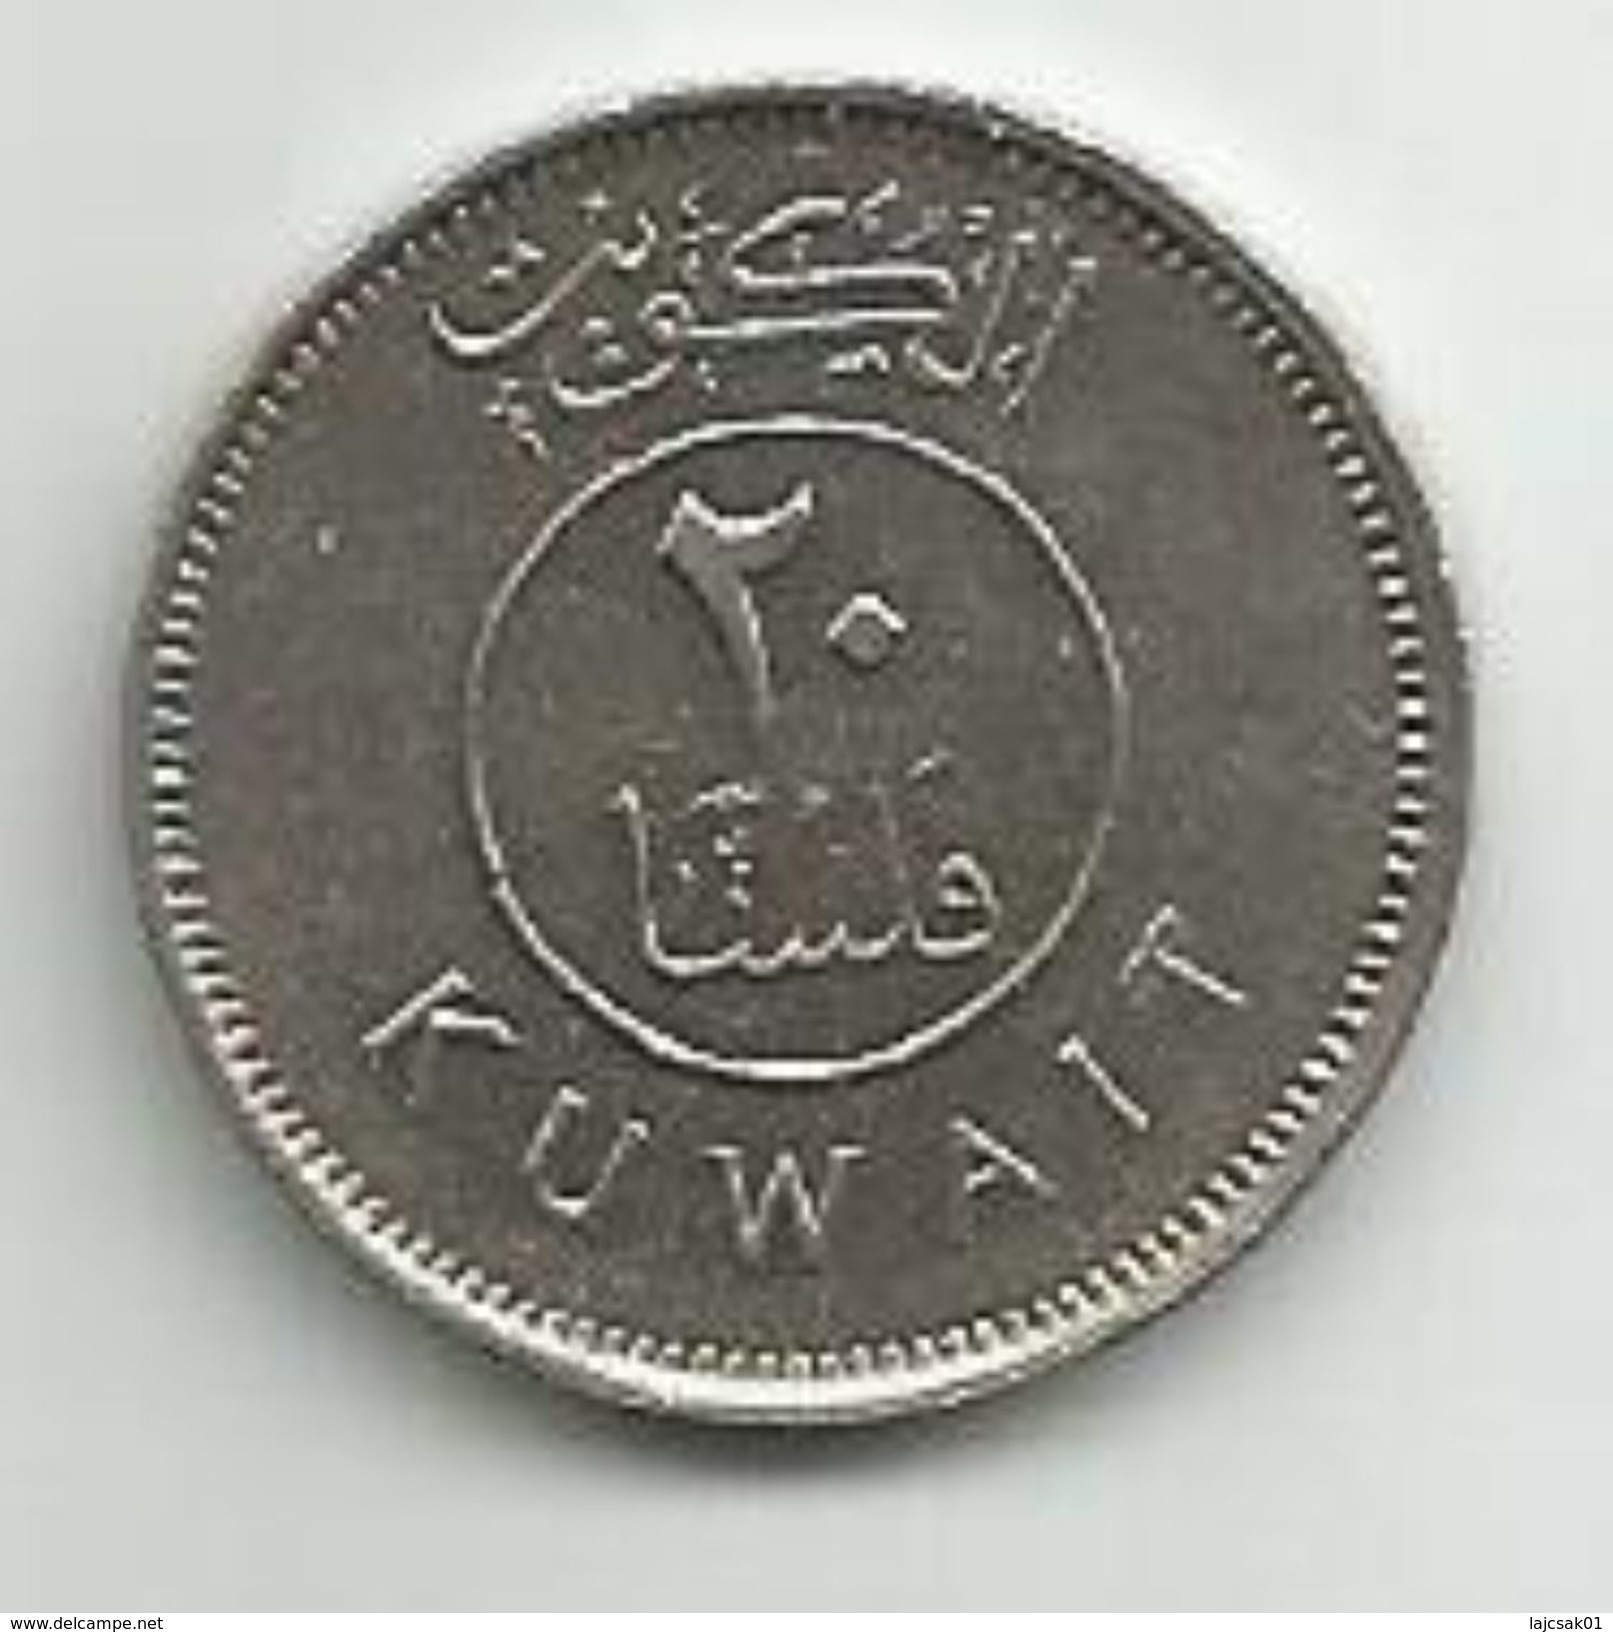 Kuwait 20 Fils 1983. - Kuwait